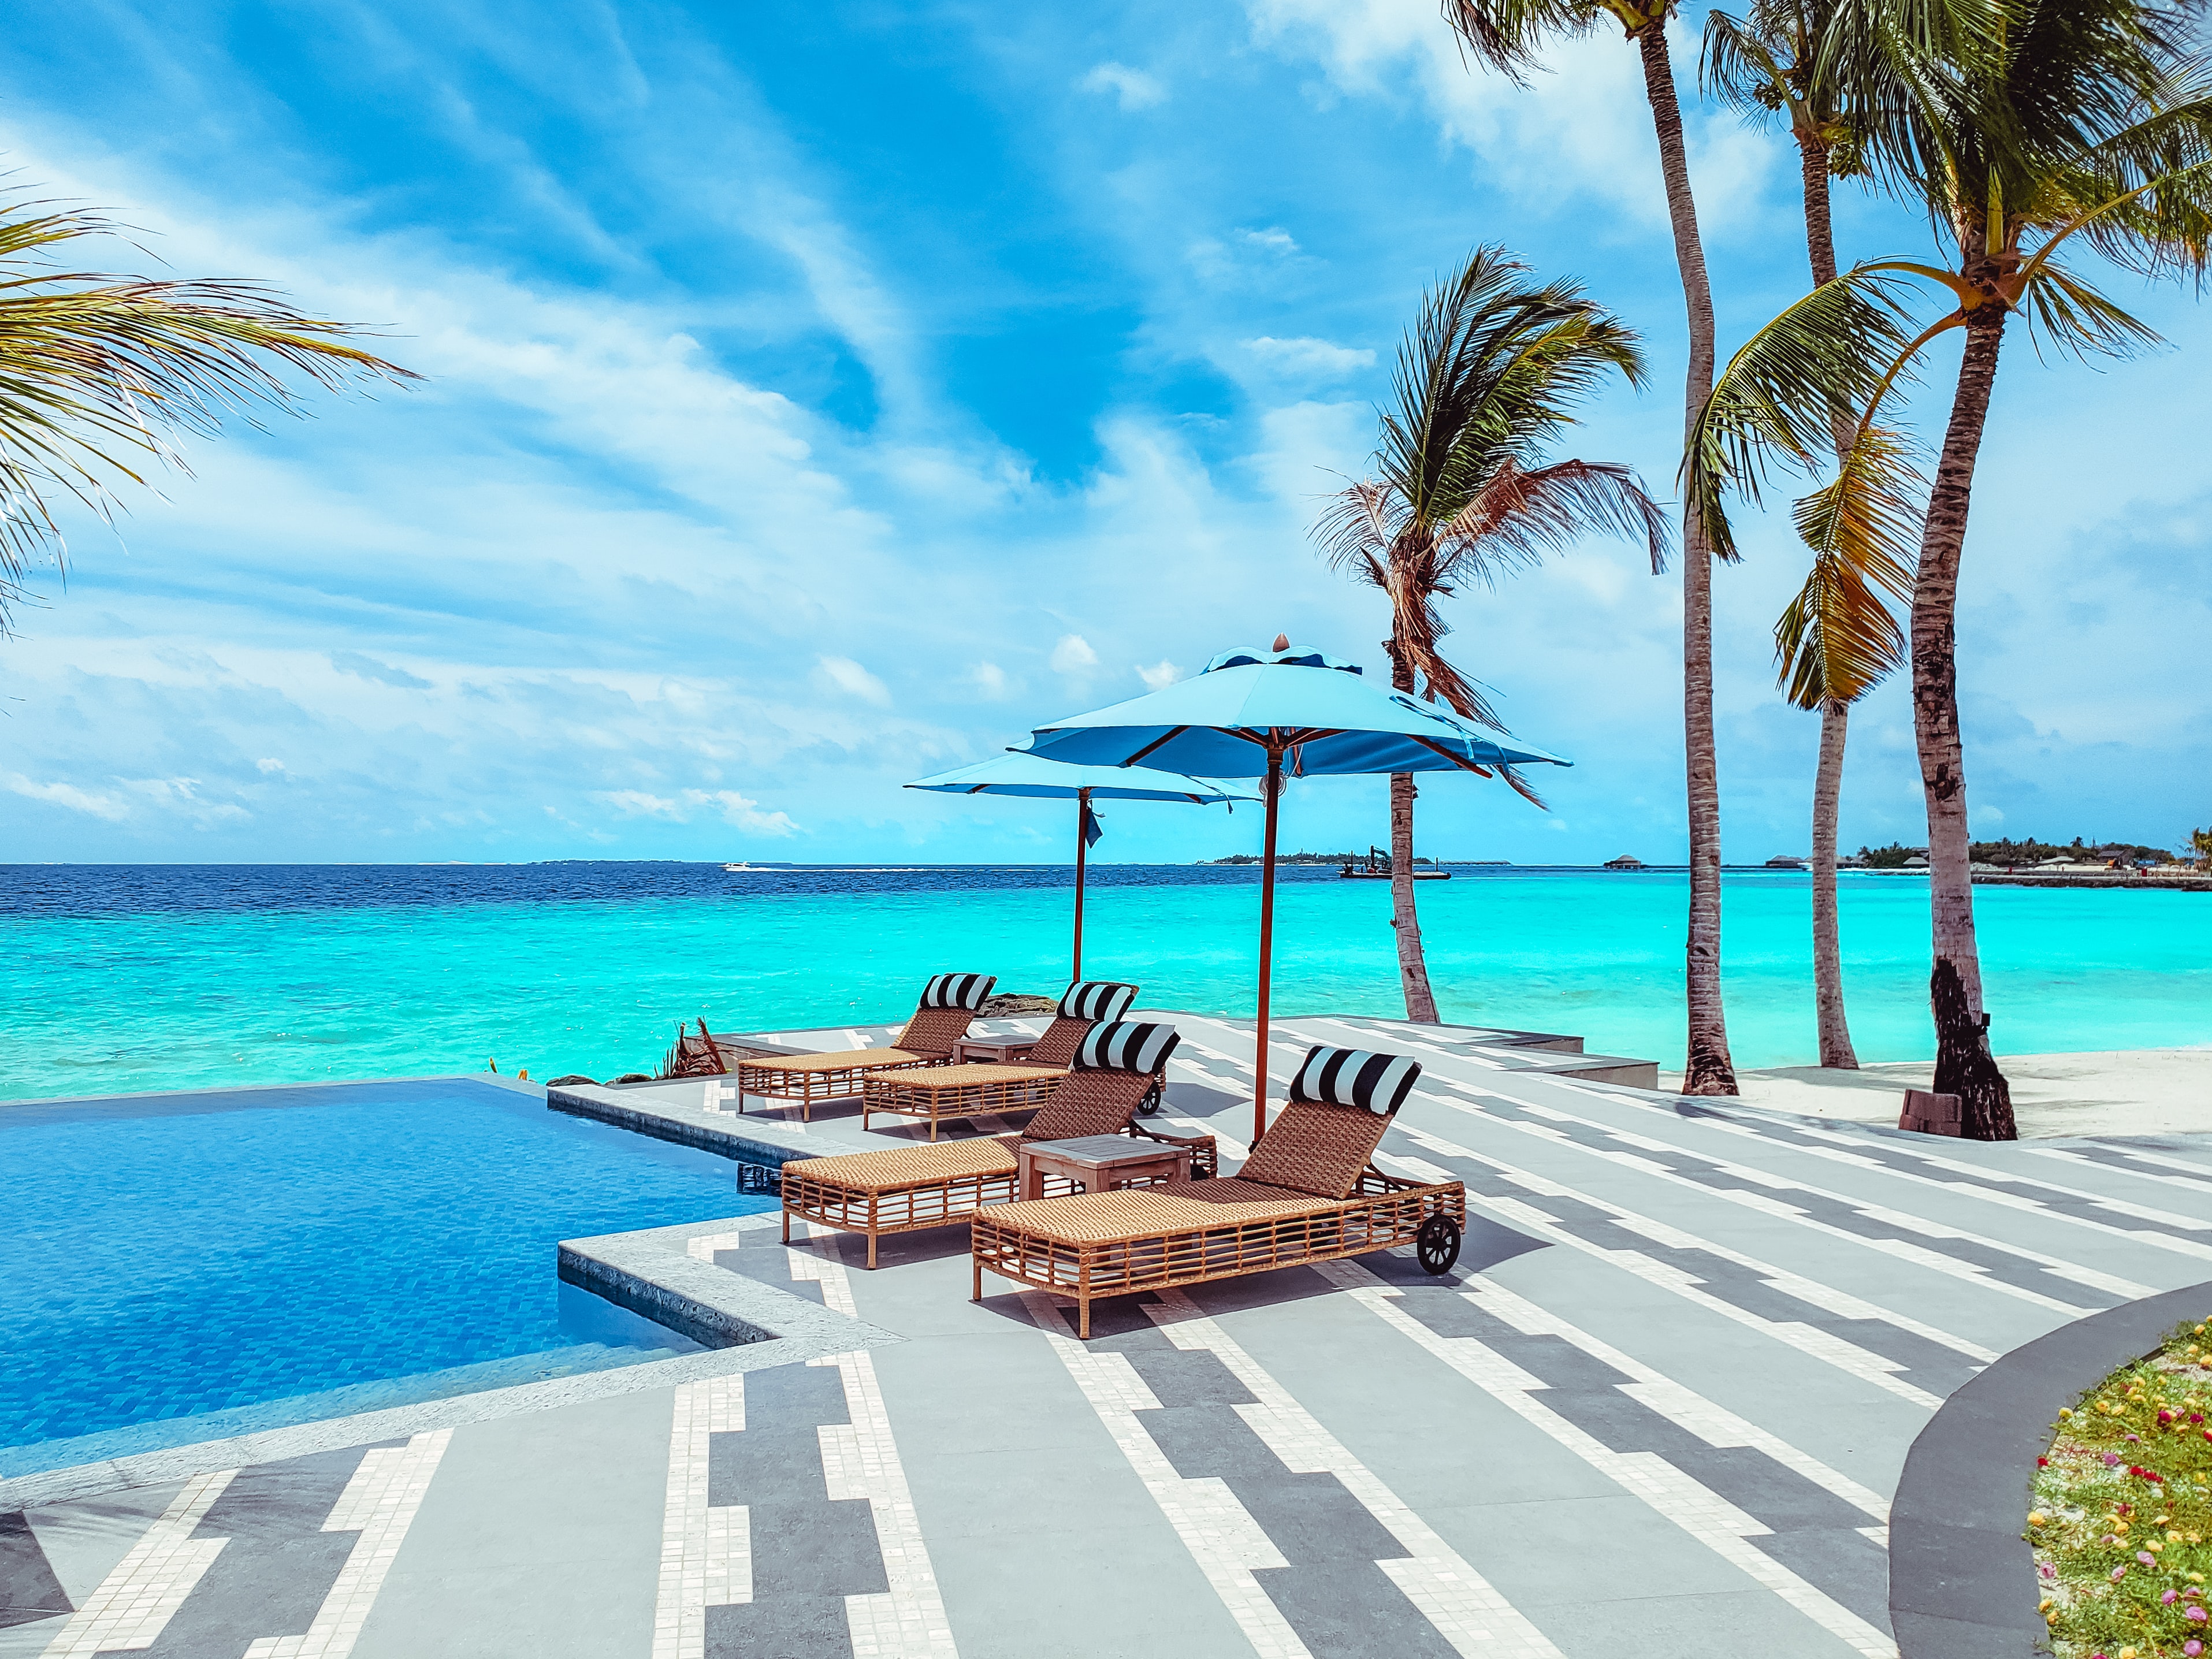 sun lounger, palms, miscellanea, miscellaneous, ocean, relaxation, rest, deck chair, umbrella High Definition image